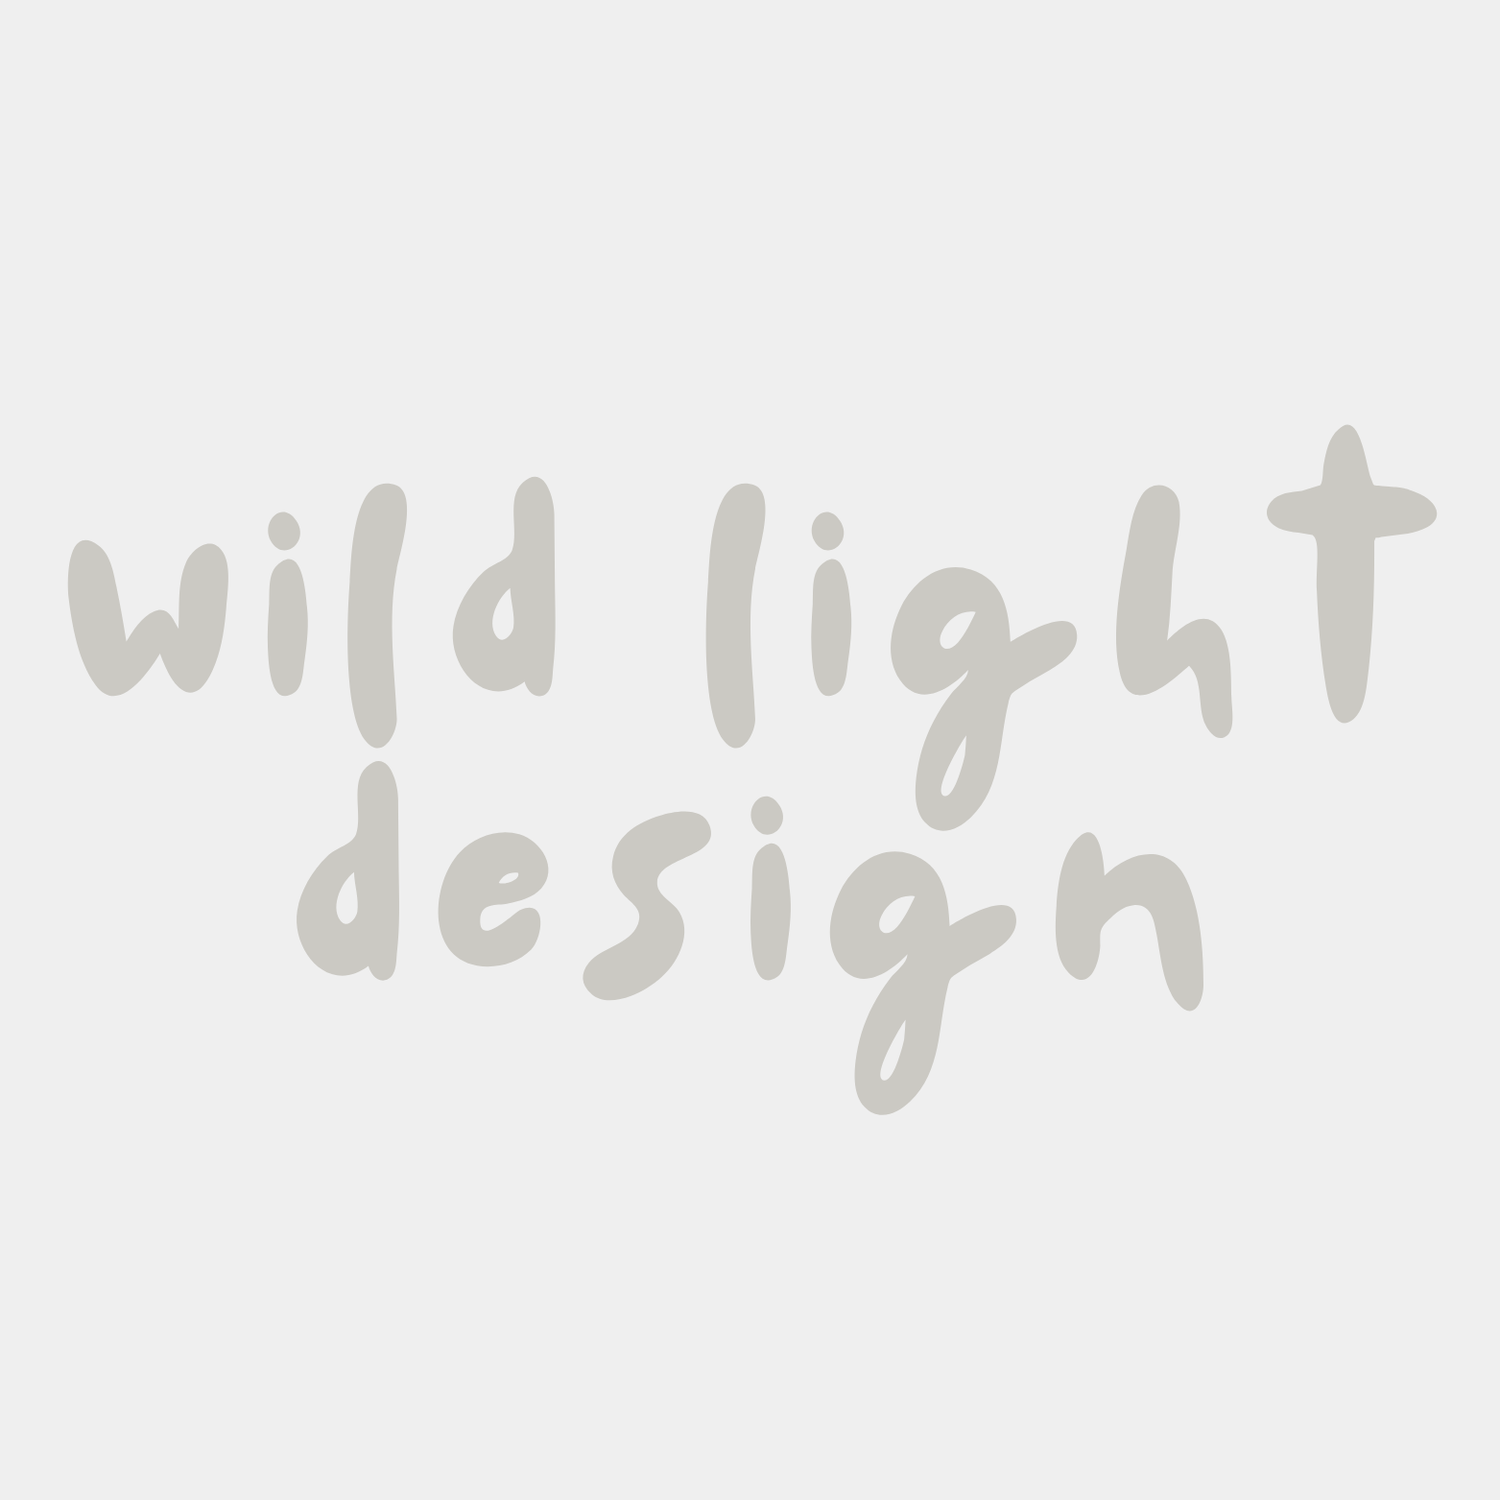 WILD LIGHT DESIGN